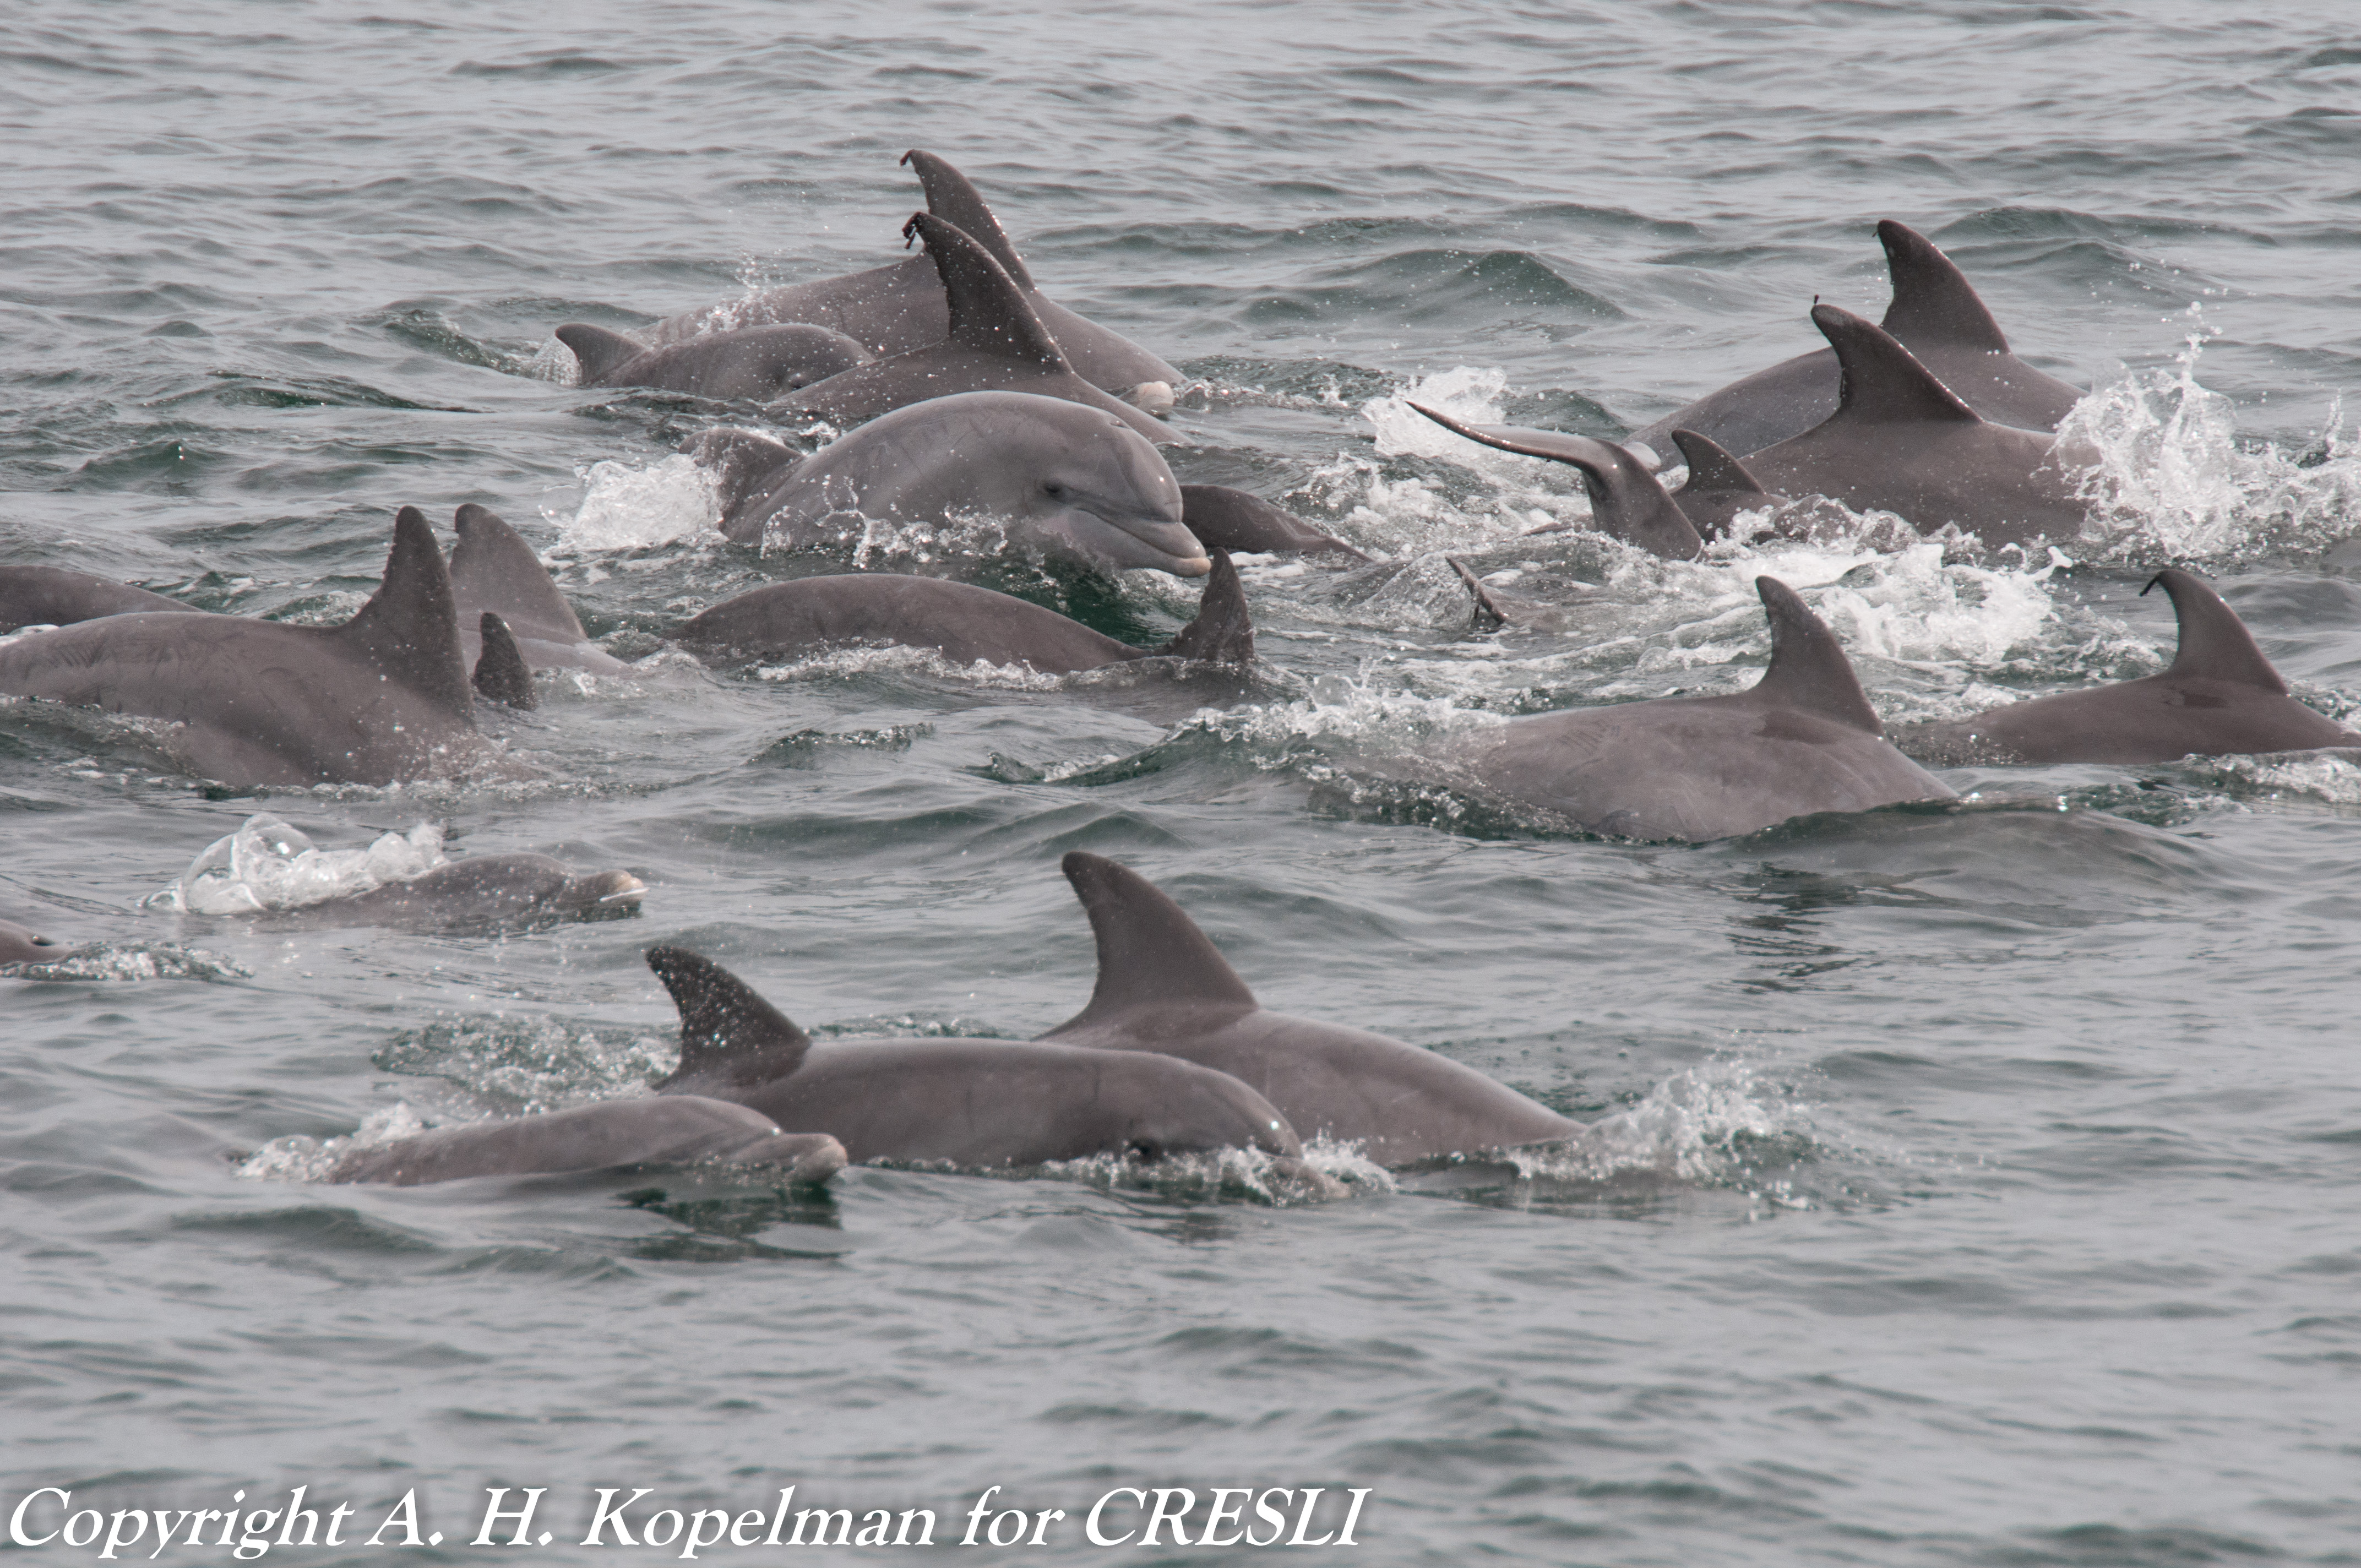 Atlantic bottlenose dolphins (now 2 different species)